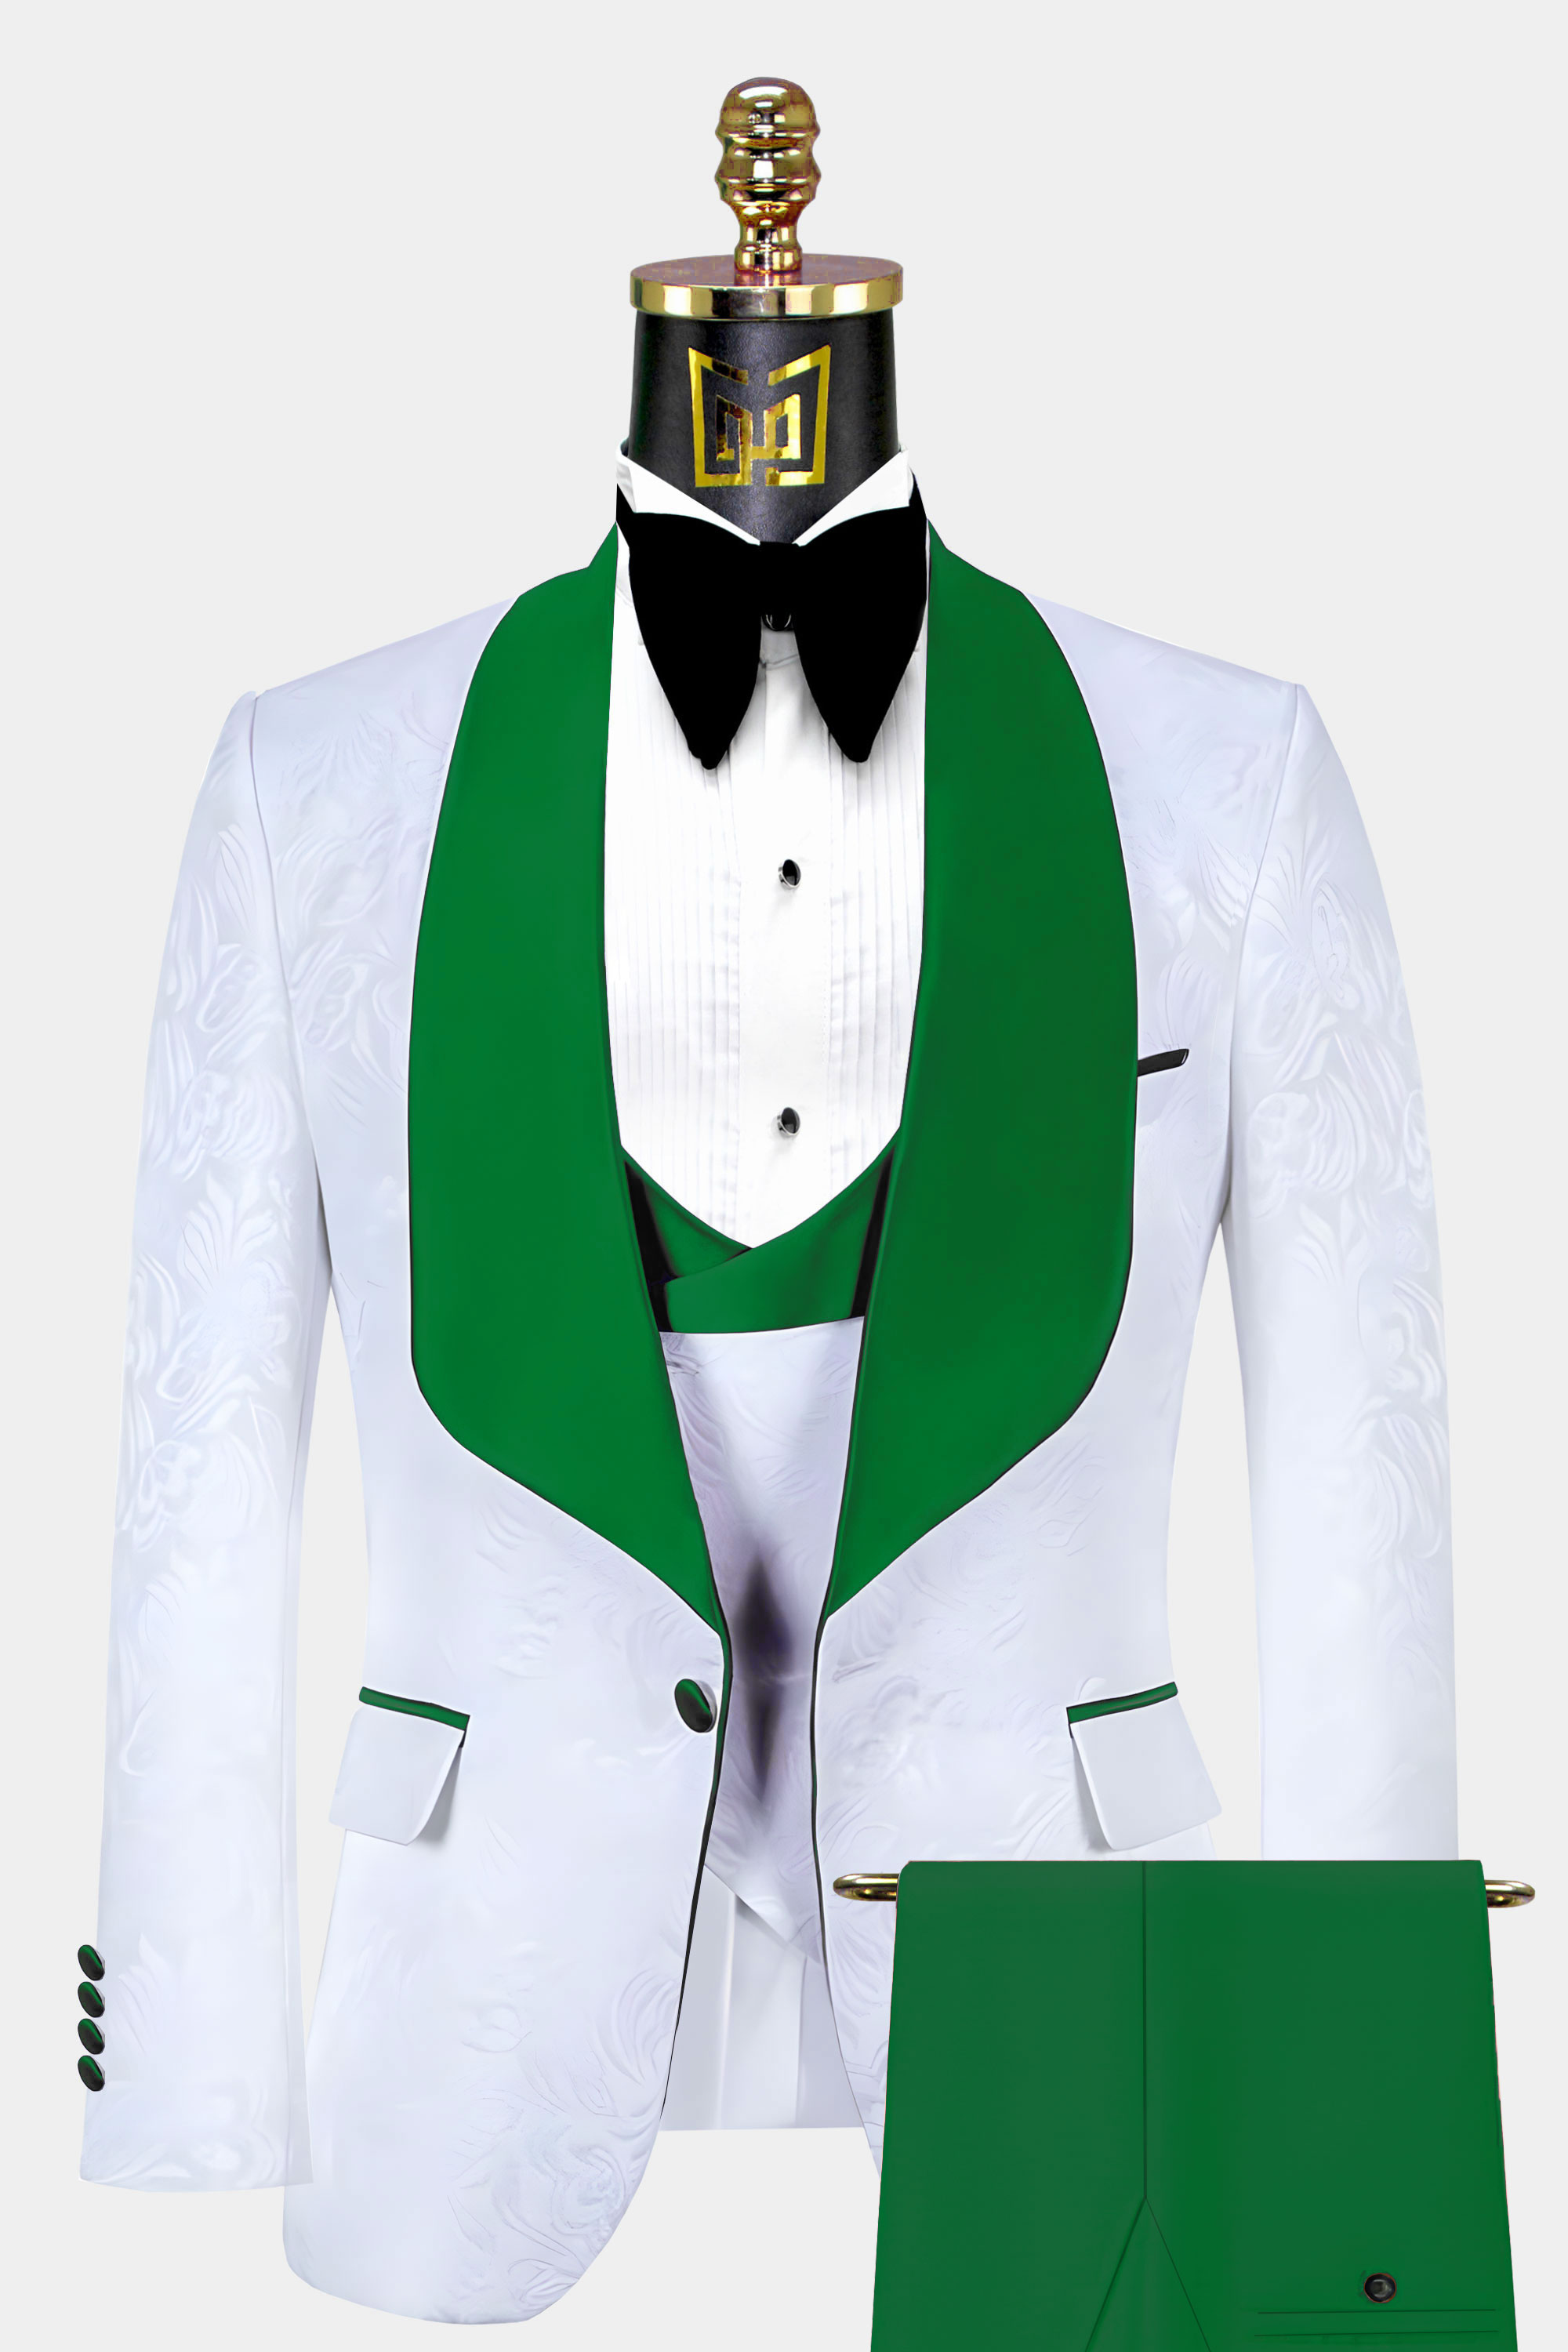 Green-and-White-Tuxedo-Wedding-Prom-Groom-Suit-For-Men-from-Gentlemansguru.com